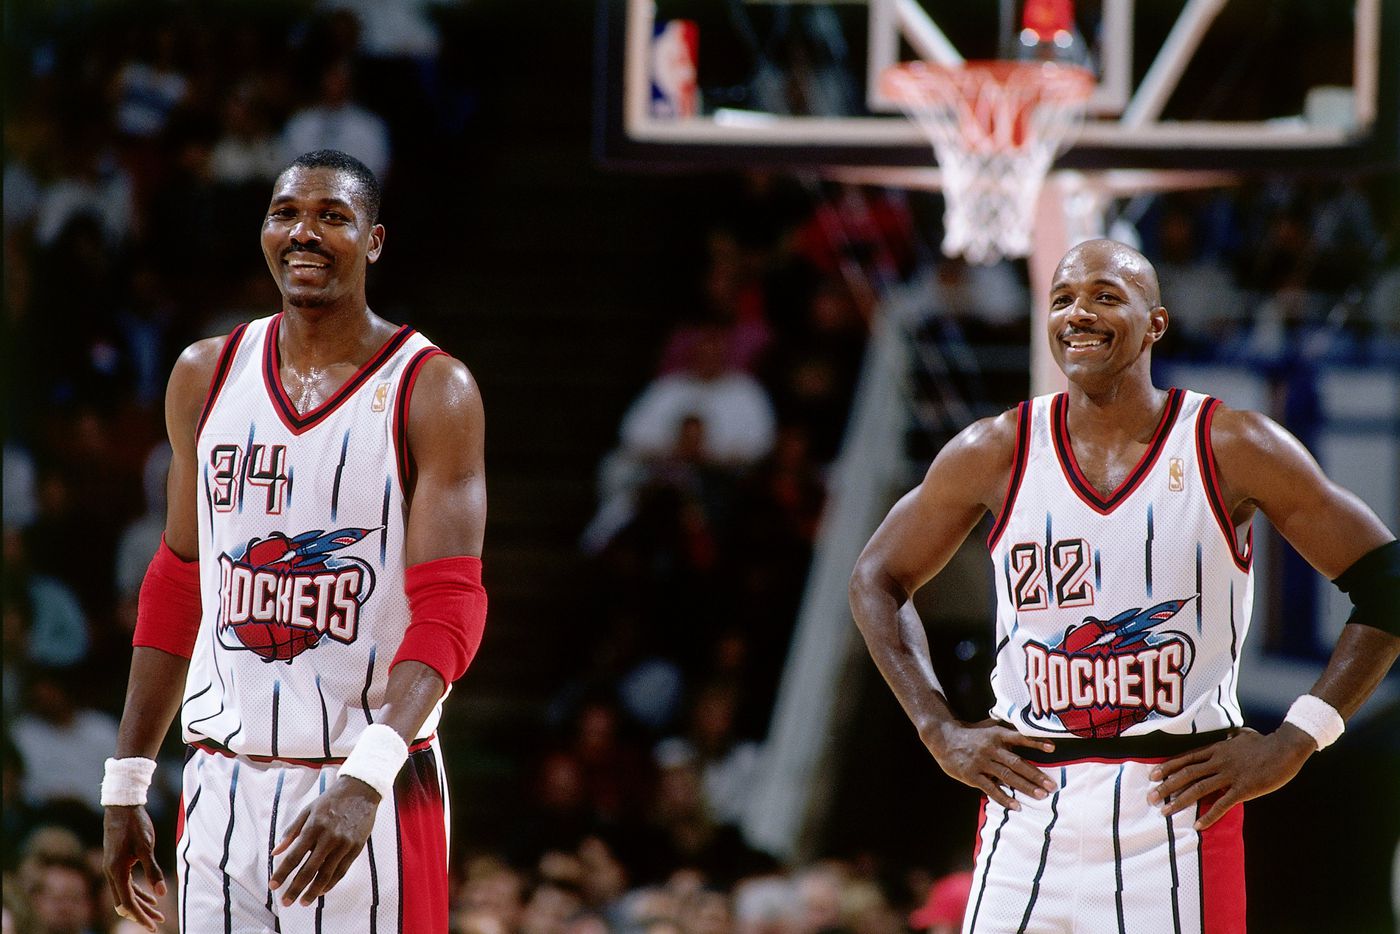 Houston Rockets Throwback Jerseys, Vintage NBA Gear